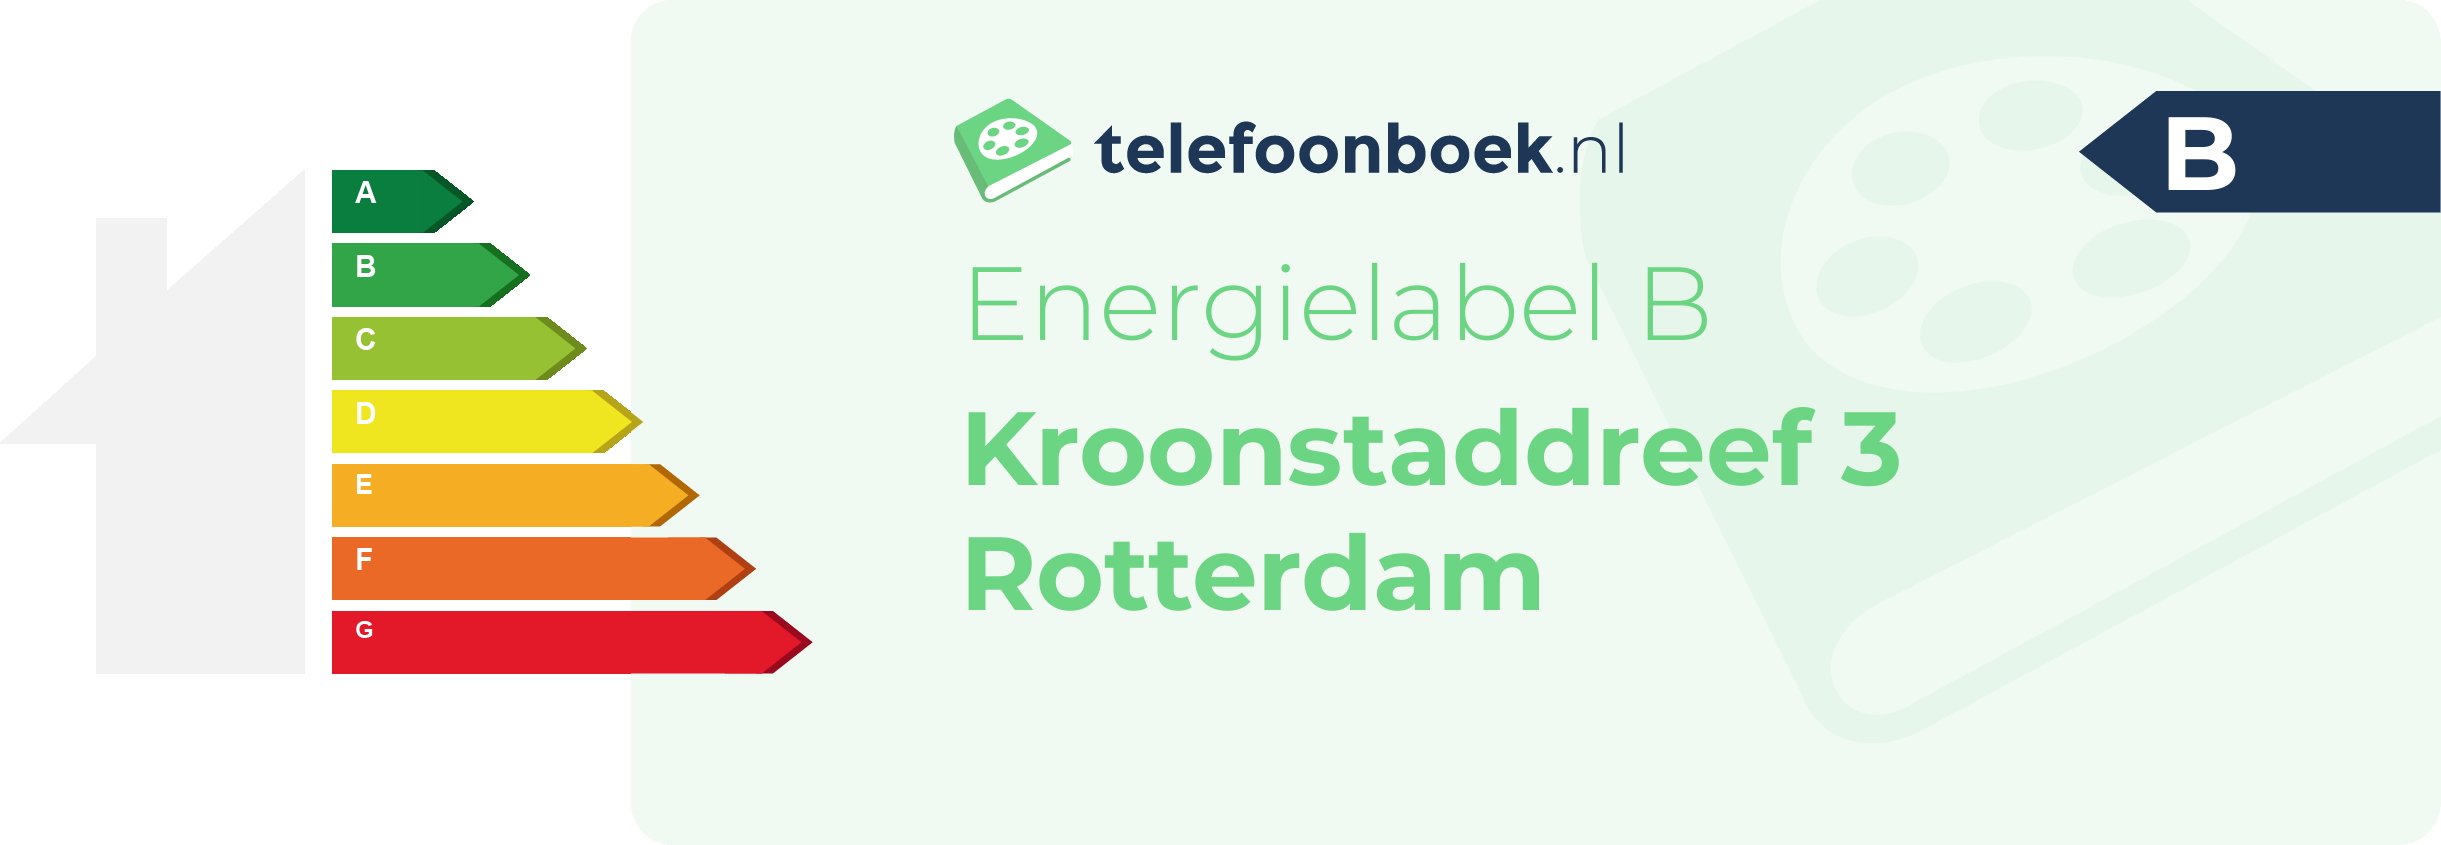 Energielabel Kroonstaddreef 3 Rotterdam